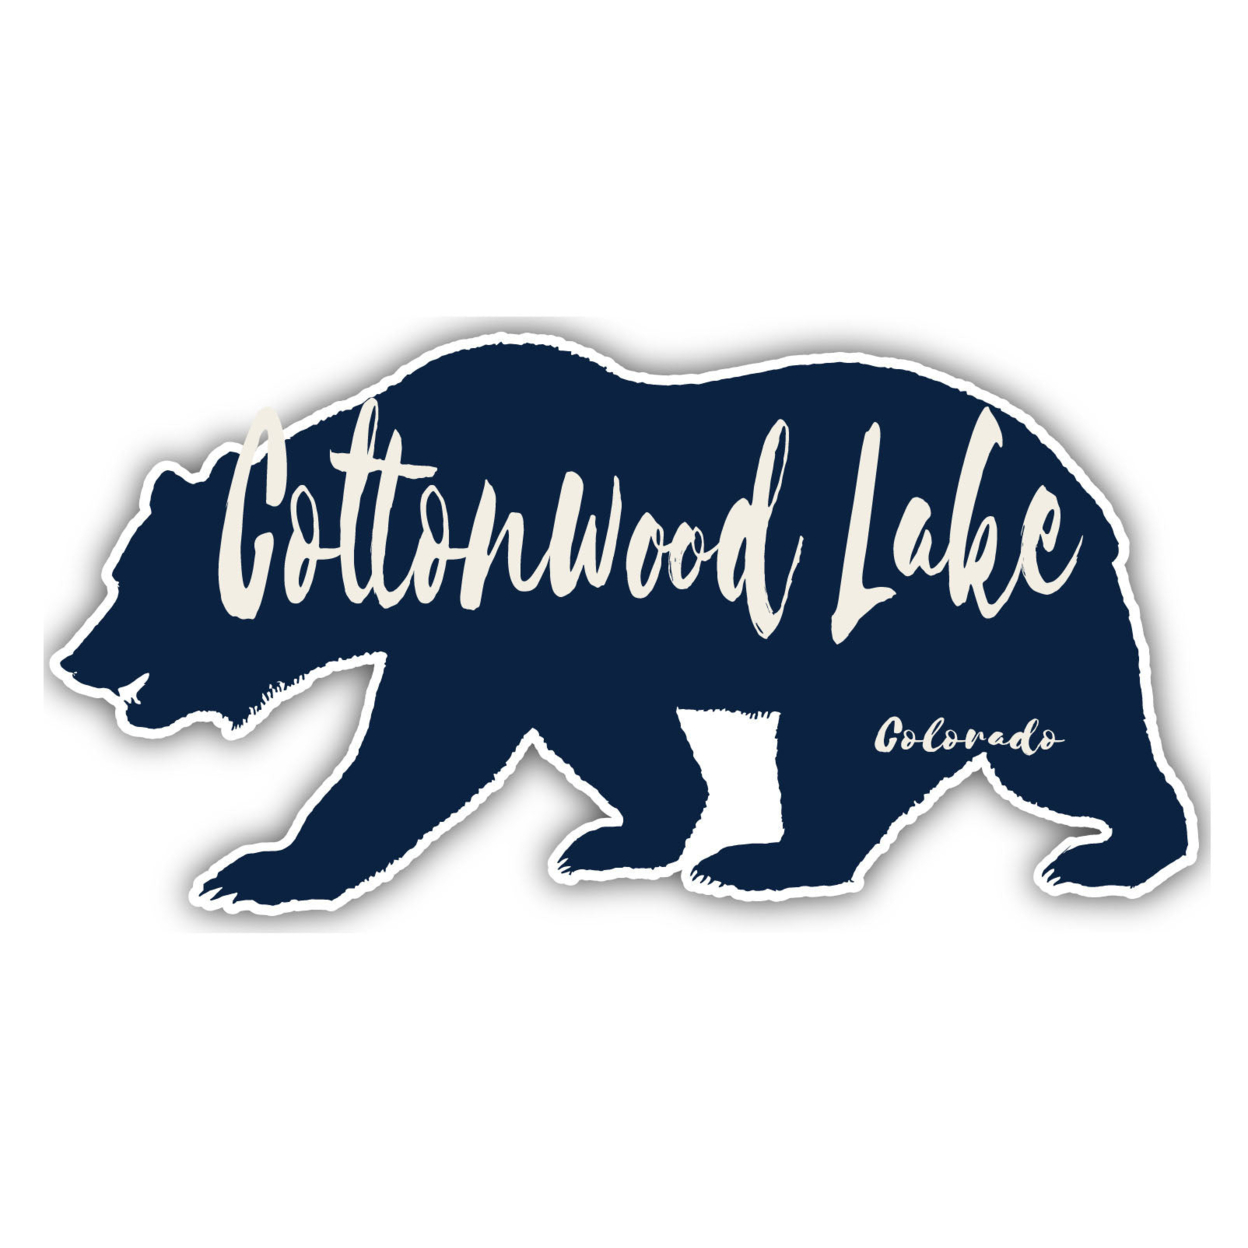 Cottonwood Lake Colorado Souvenir Decorative Stickers (Choose Theme And Size) - Single Unit, 8-Inch, Camp Life